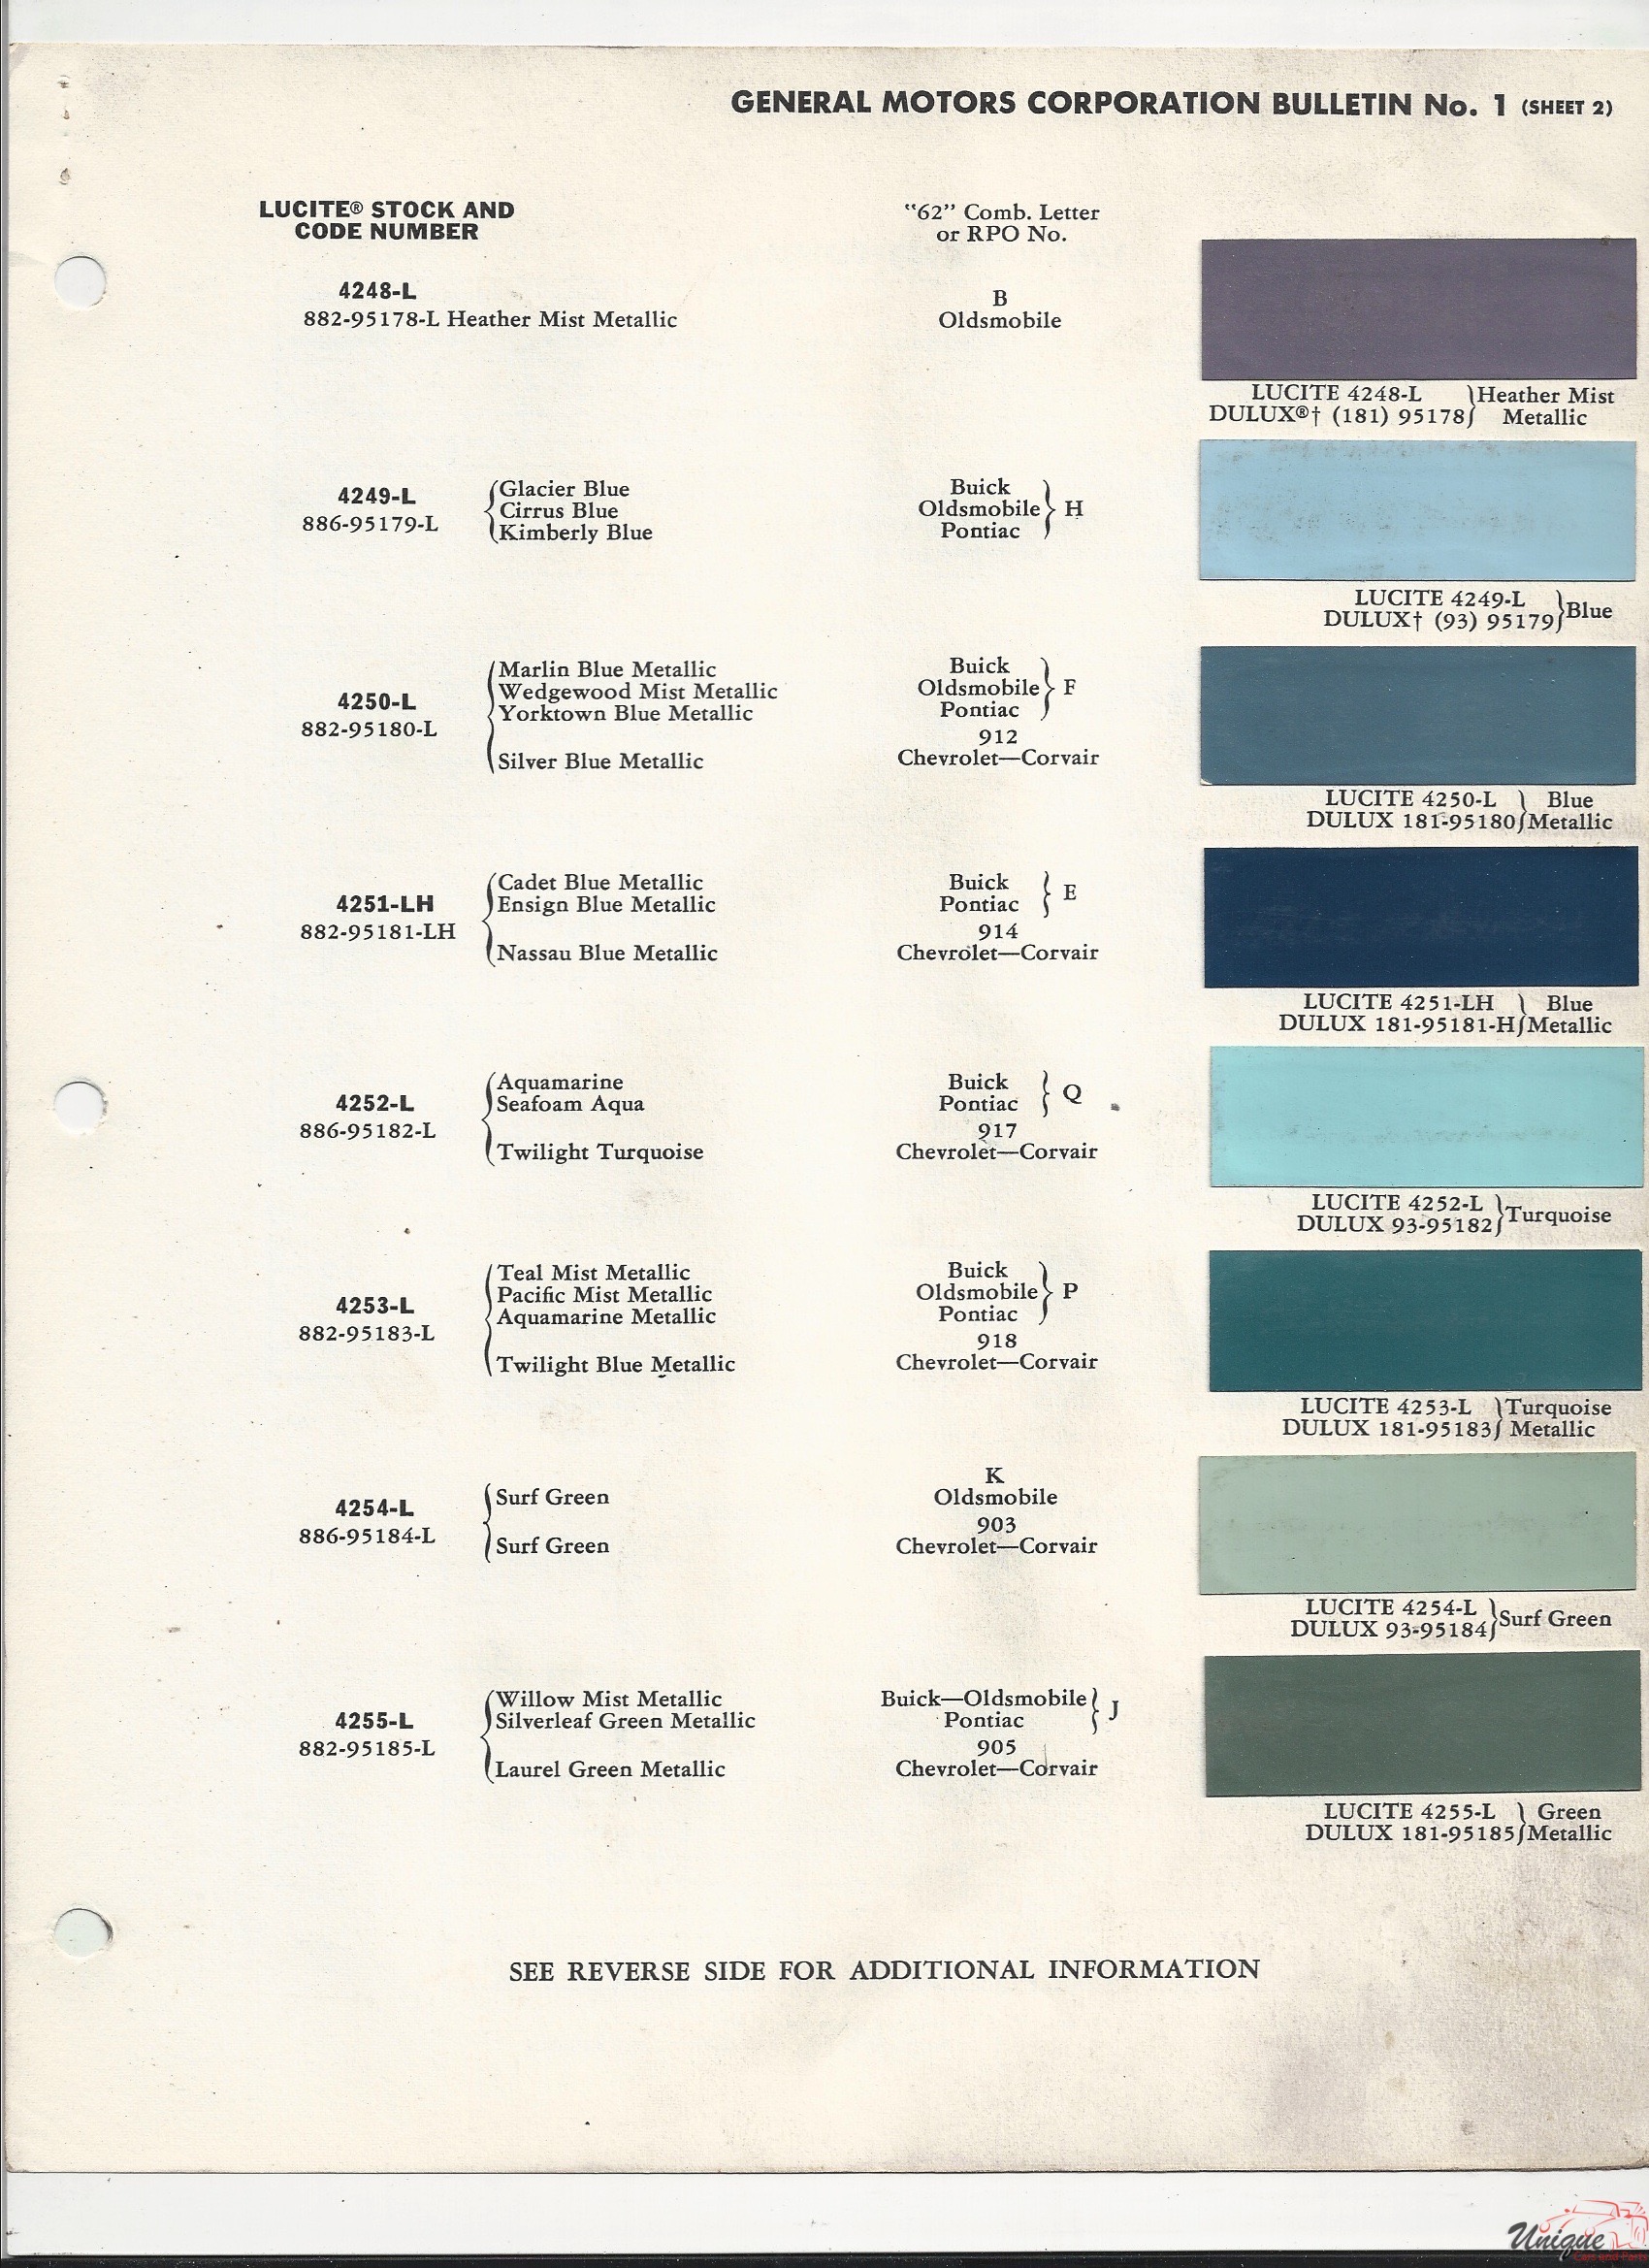 1962 GM-2 Paint Charts